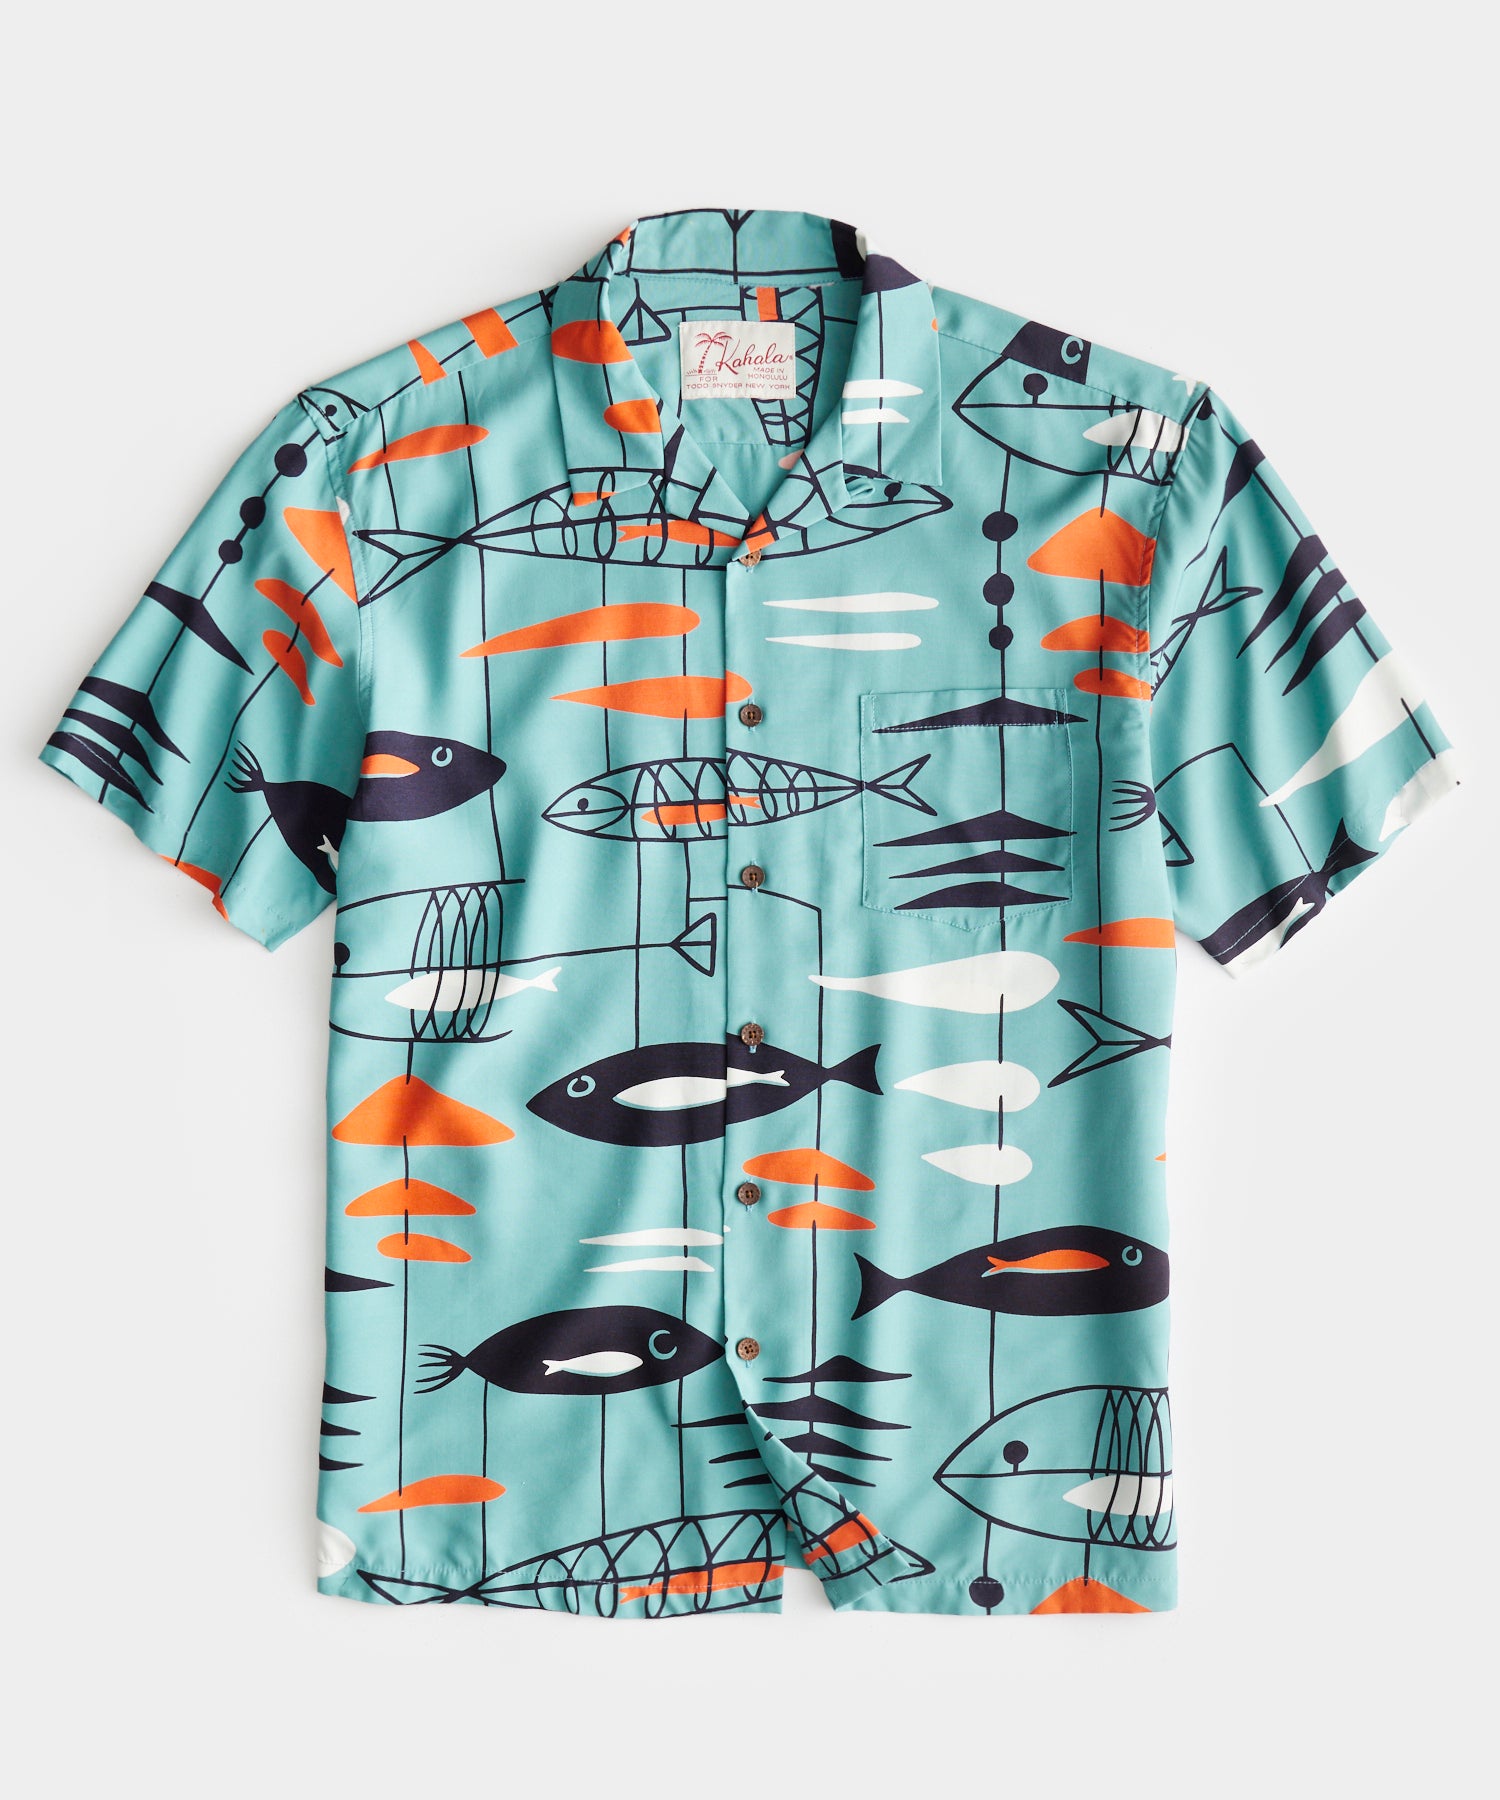 Todd Snyder x Kahala Aloha Shirt in Teal Fish